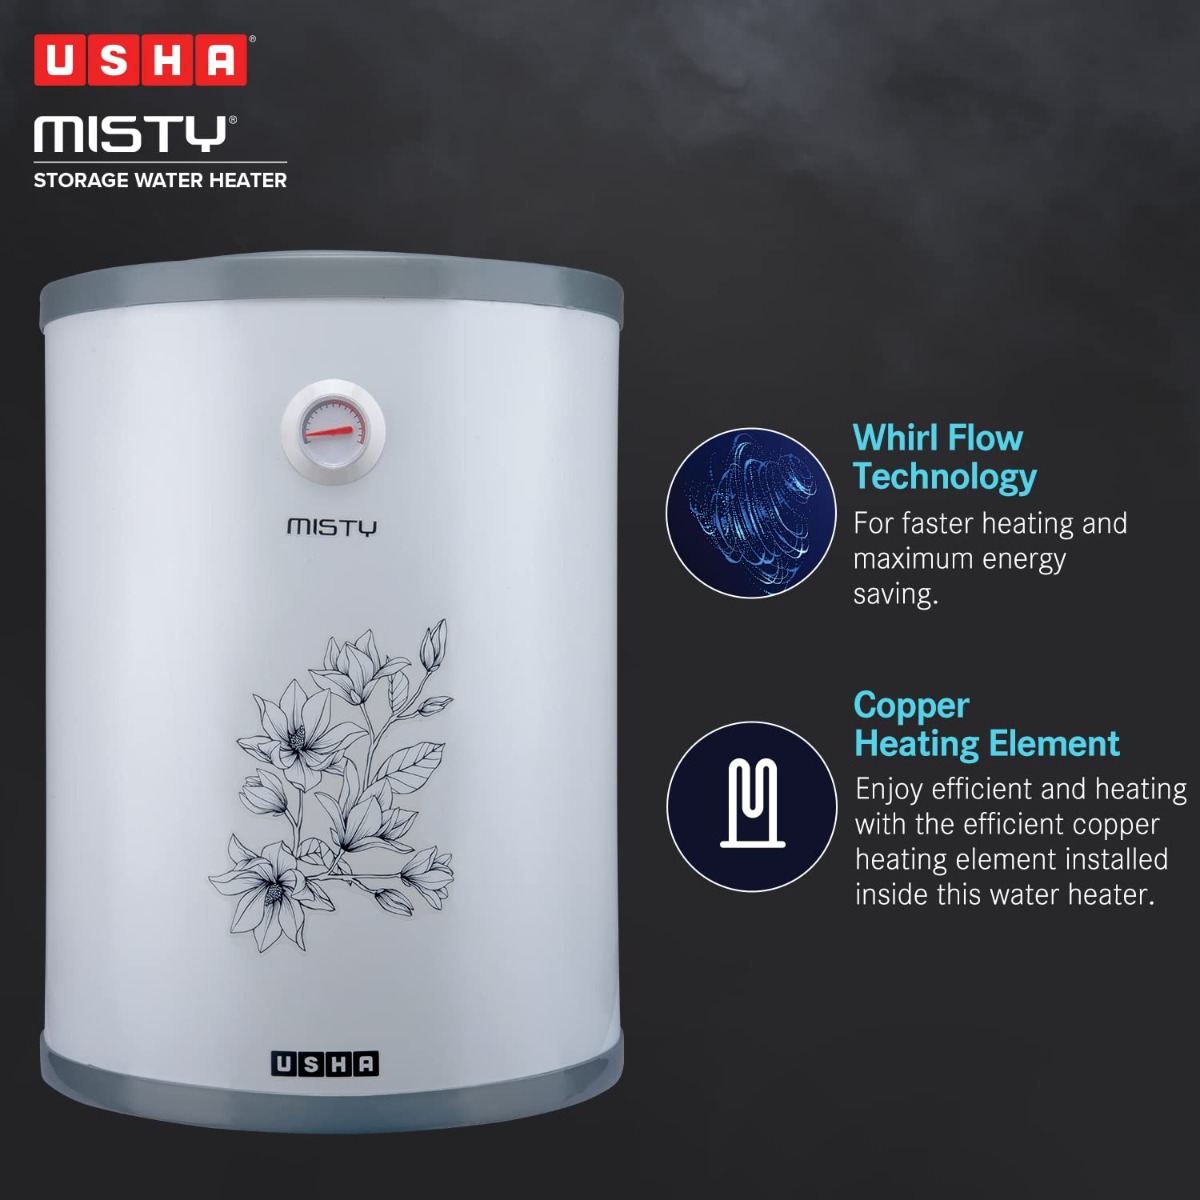 Usha Misty 25 Ltr 2000-Watt 5 Star Storage Water Heater (Grey Magnolia)